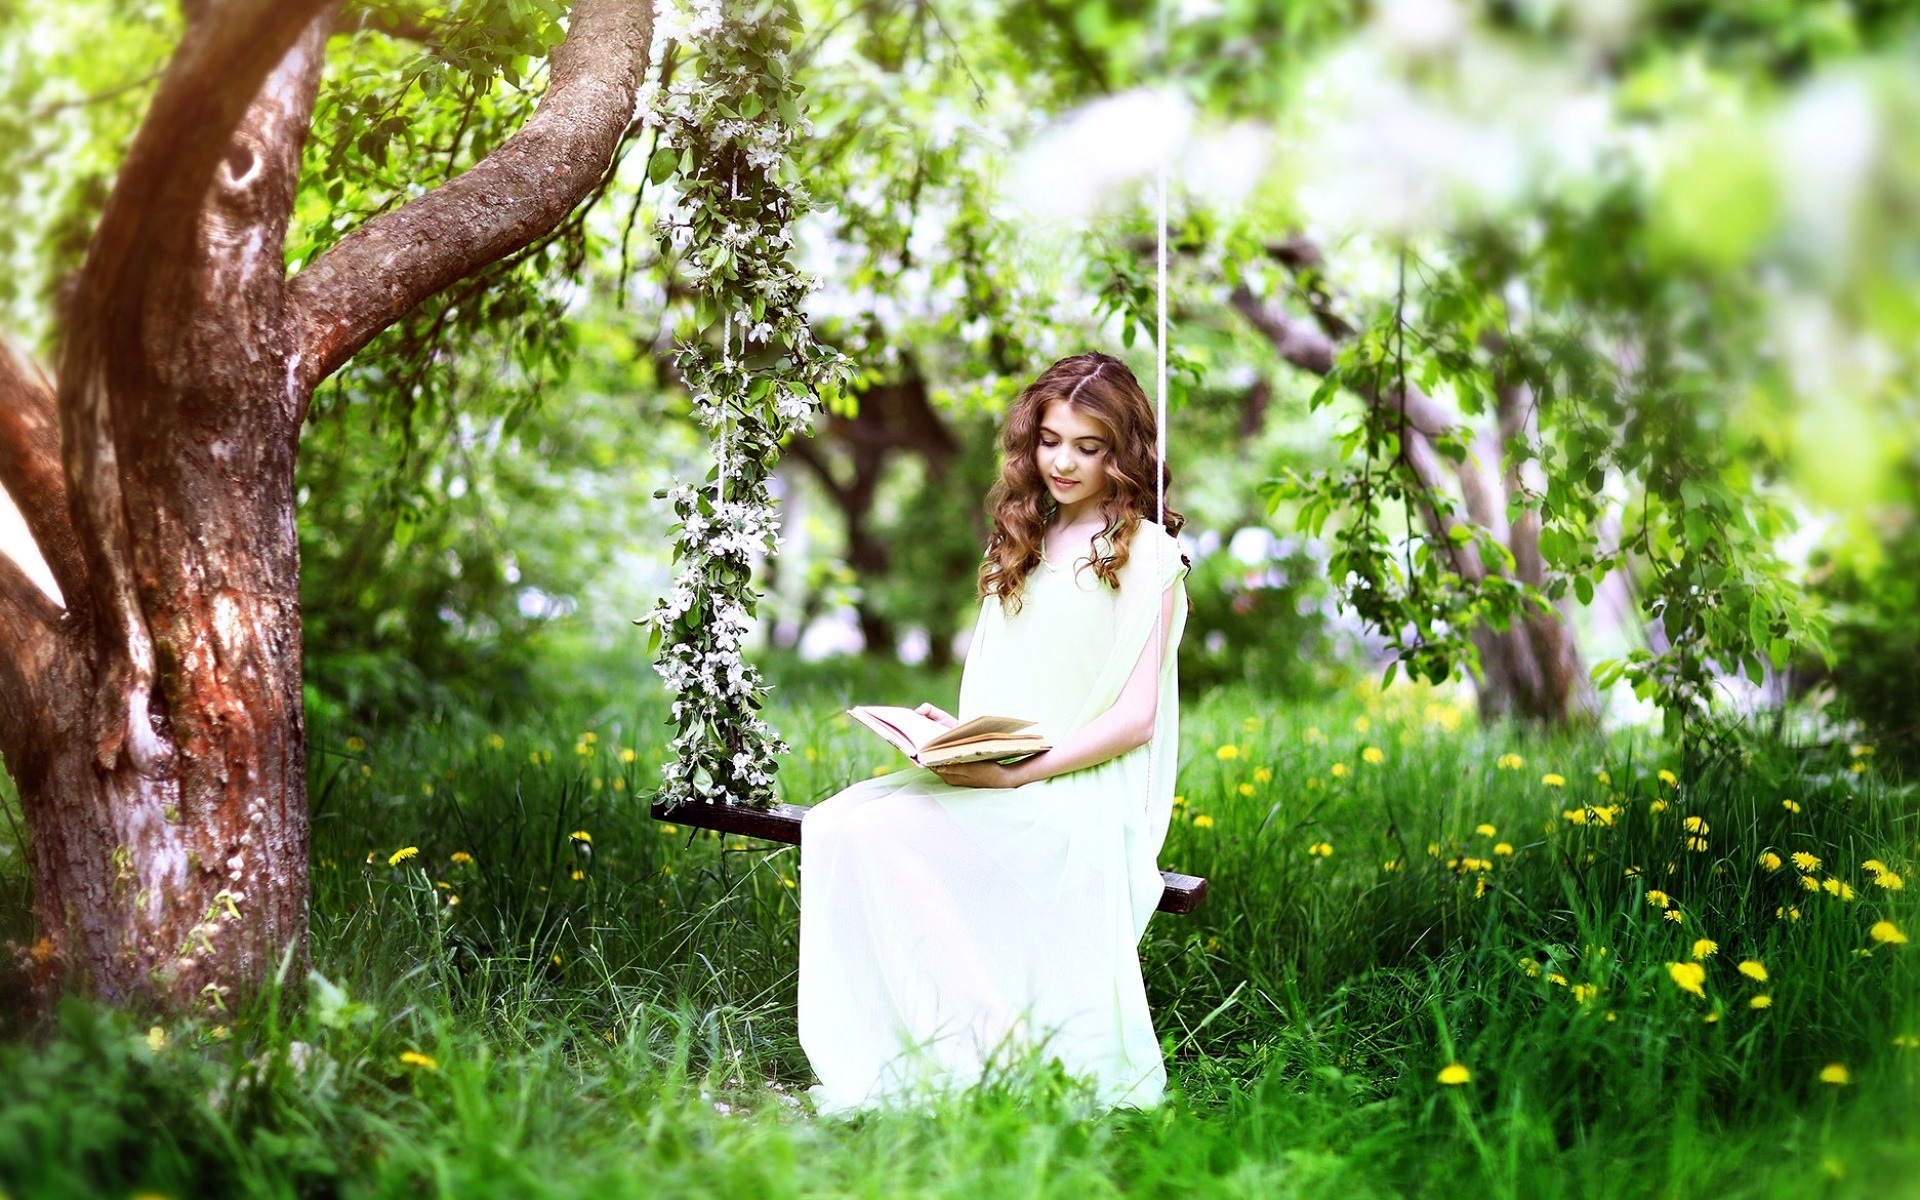 Grass-tree-spring-white-dress-girl-read-book_1920x1200.jpg